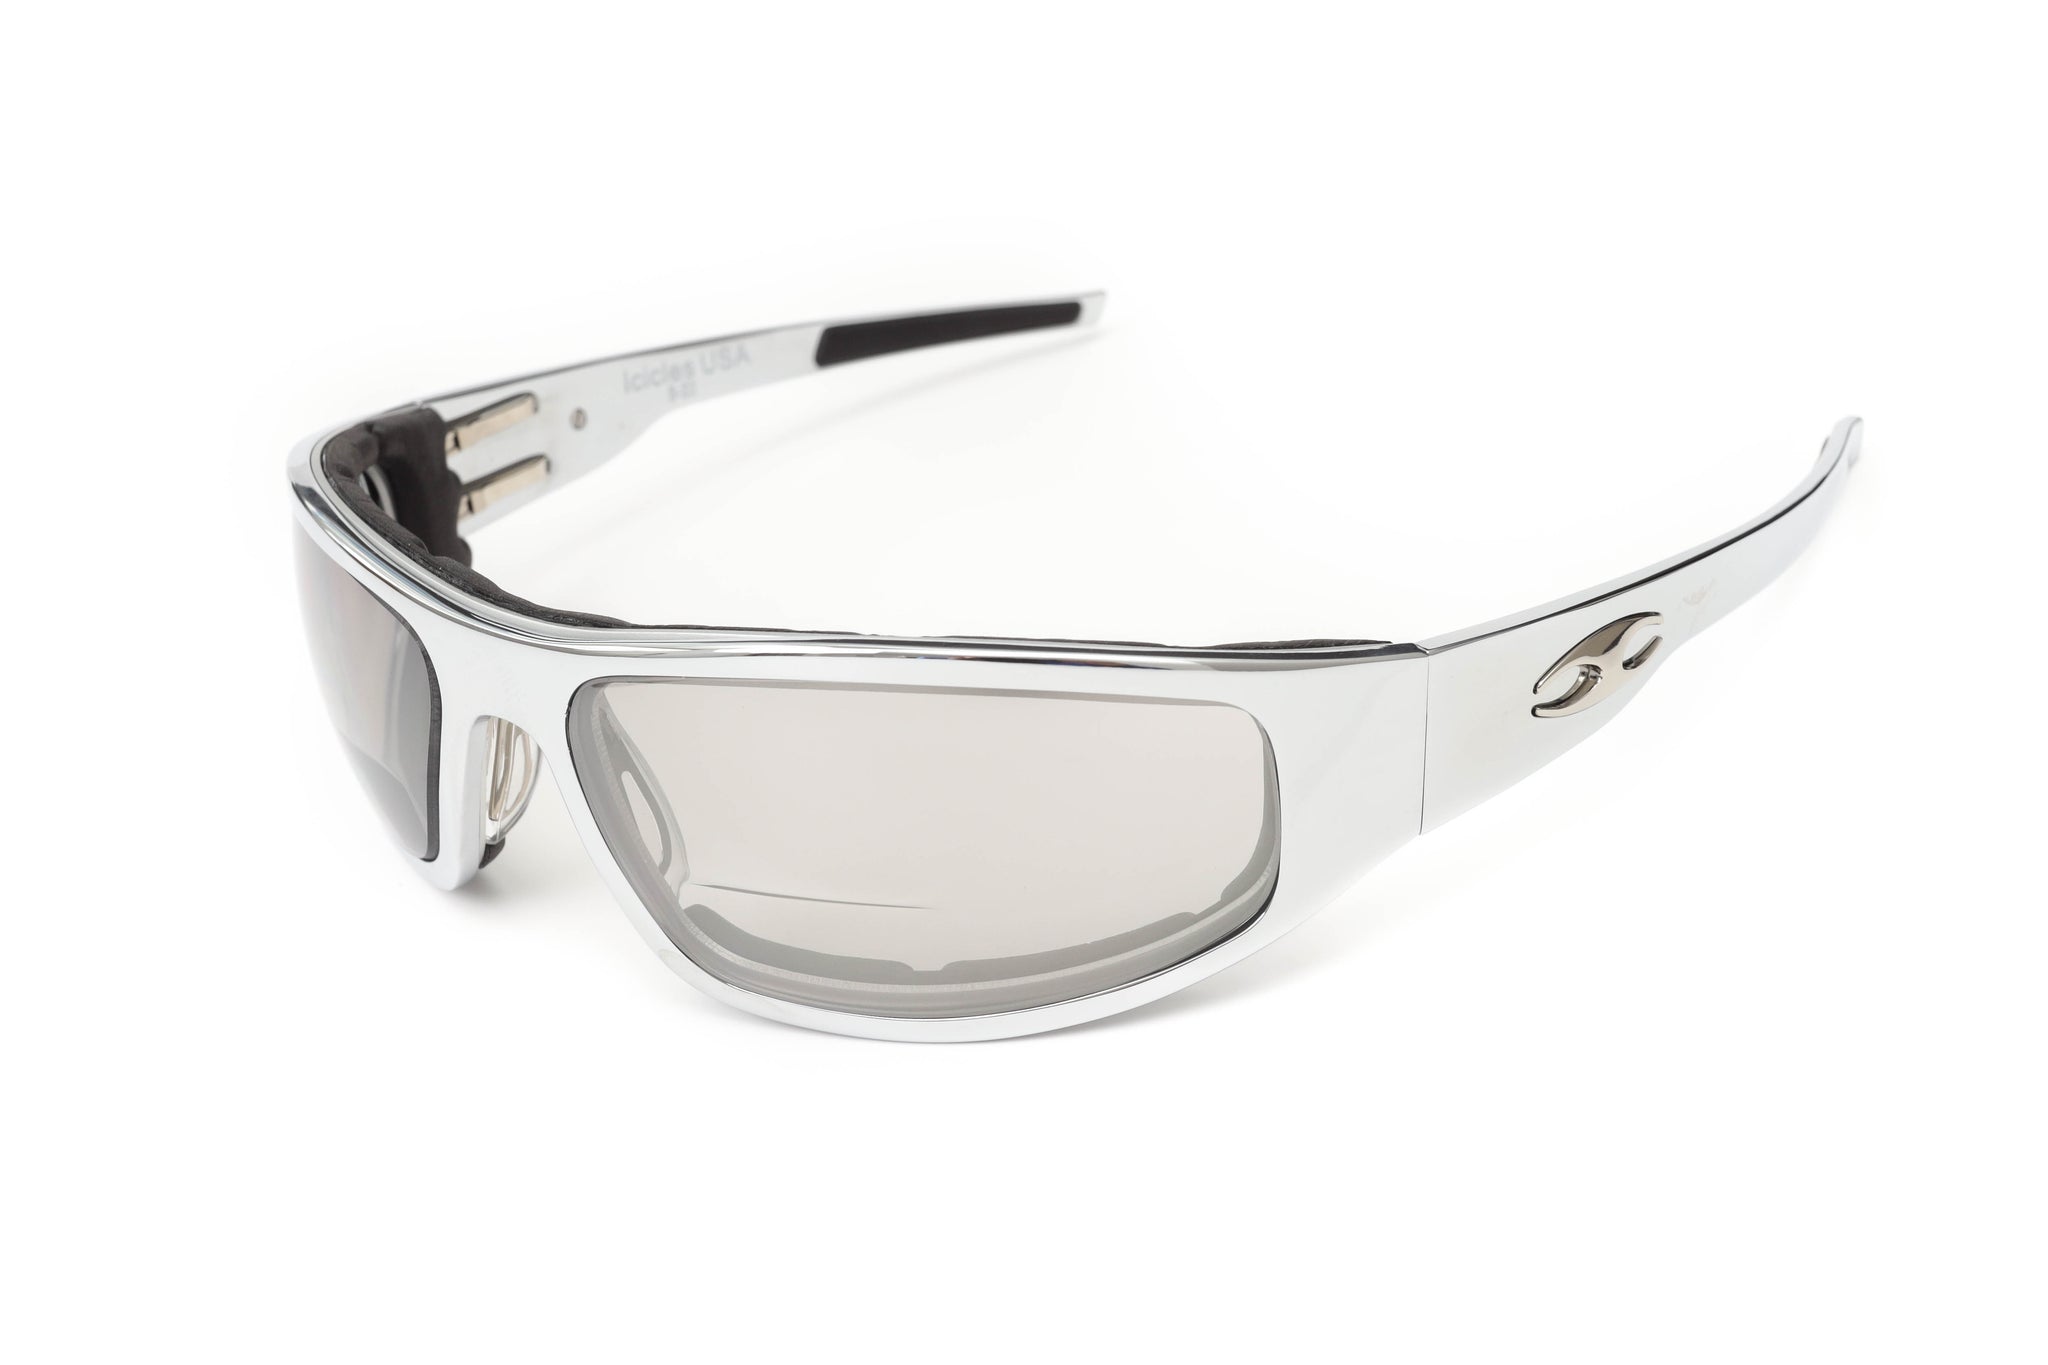 Icicles Eyewear “Bagger” Chrome Motorcycle Sunglasses (Smooth) No - Single / Standard - Grey / No